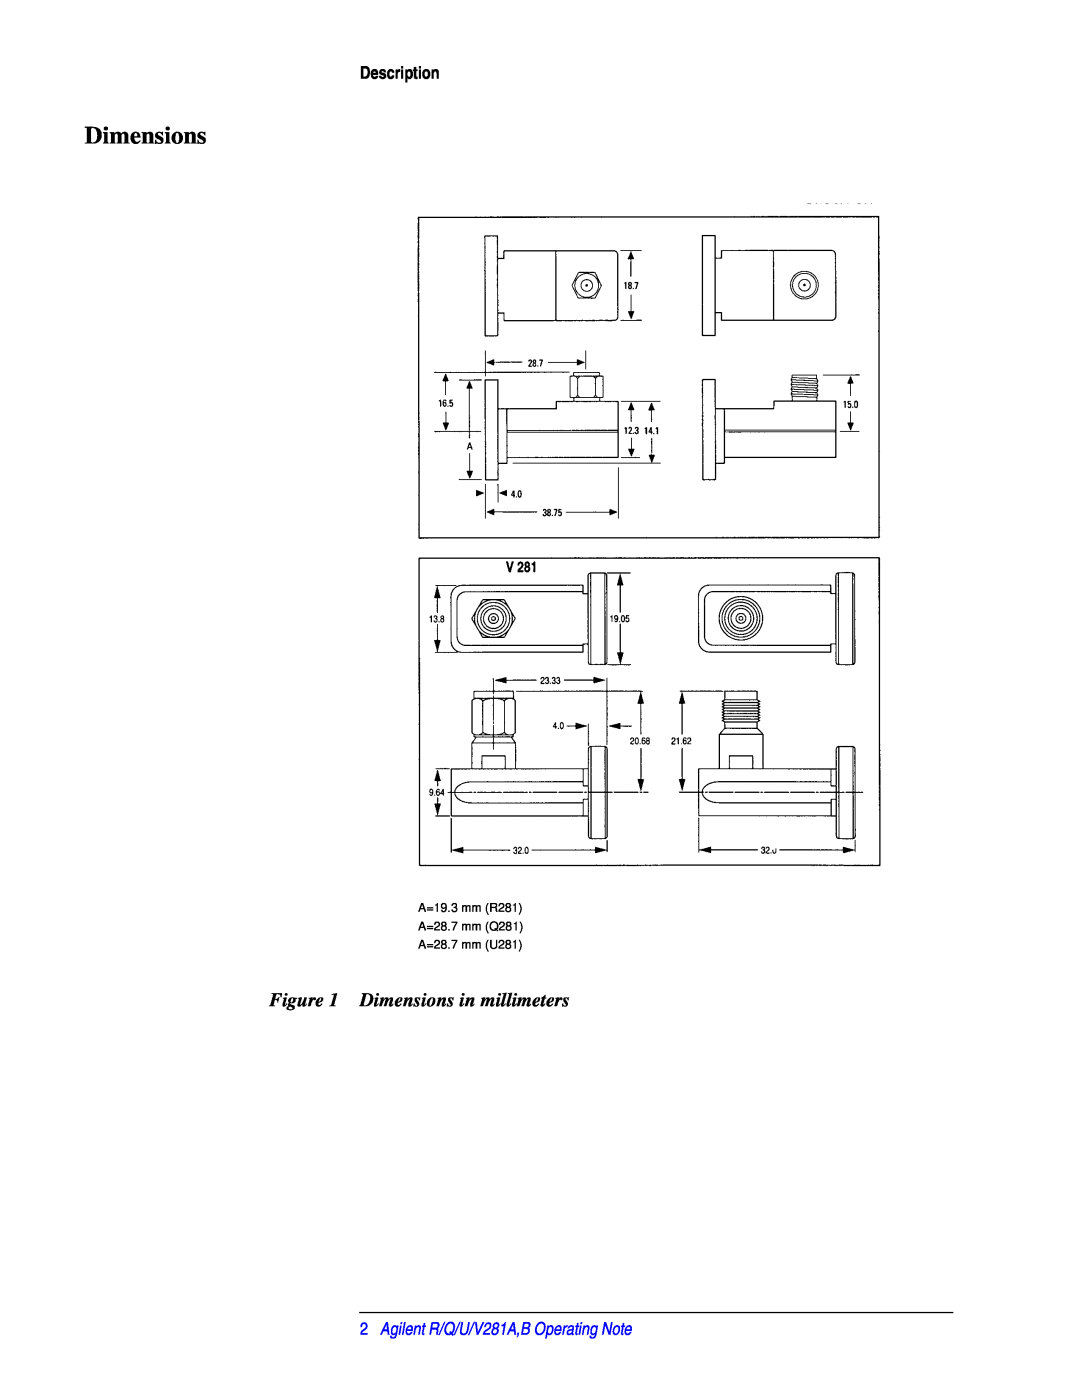 Agilent Technologies 00281-90055 manual Dimensions in millimeters, Description, Agilent R/Q/U/V281A,B Operating Note 